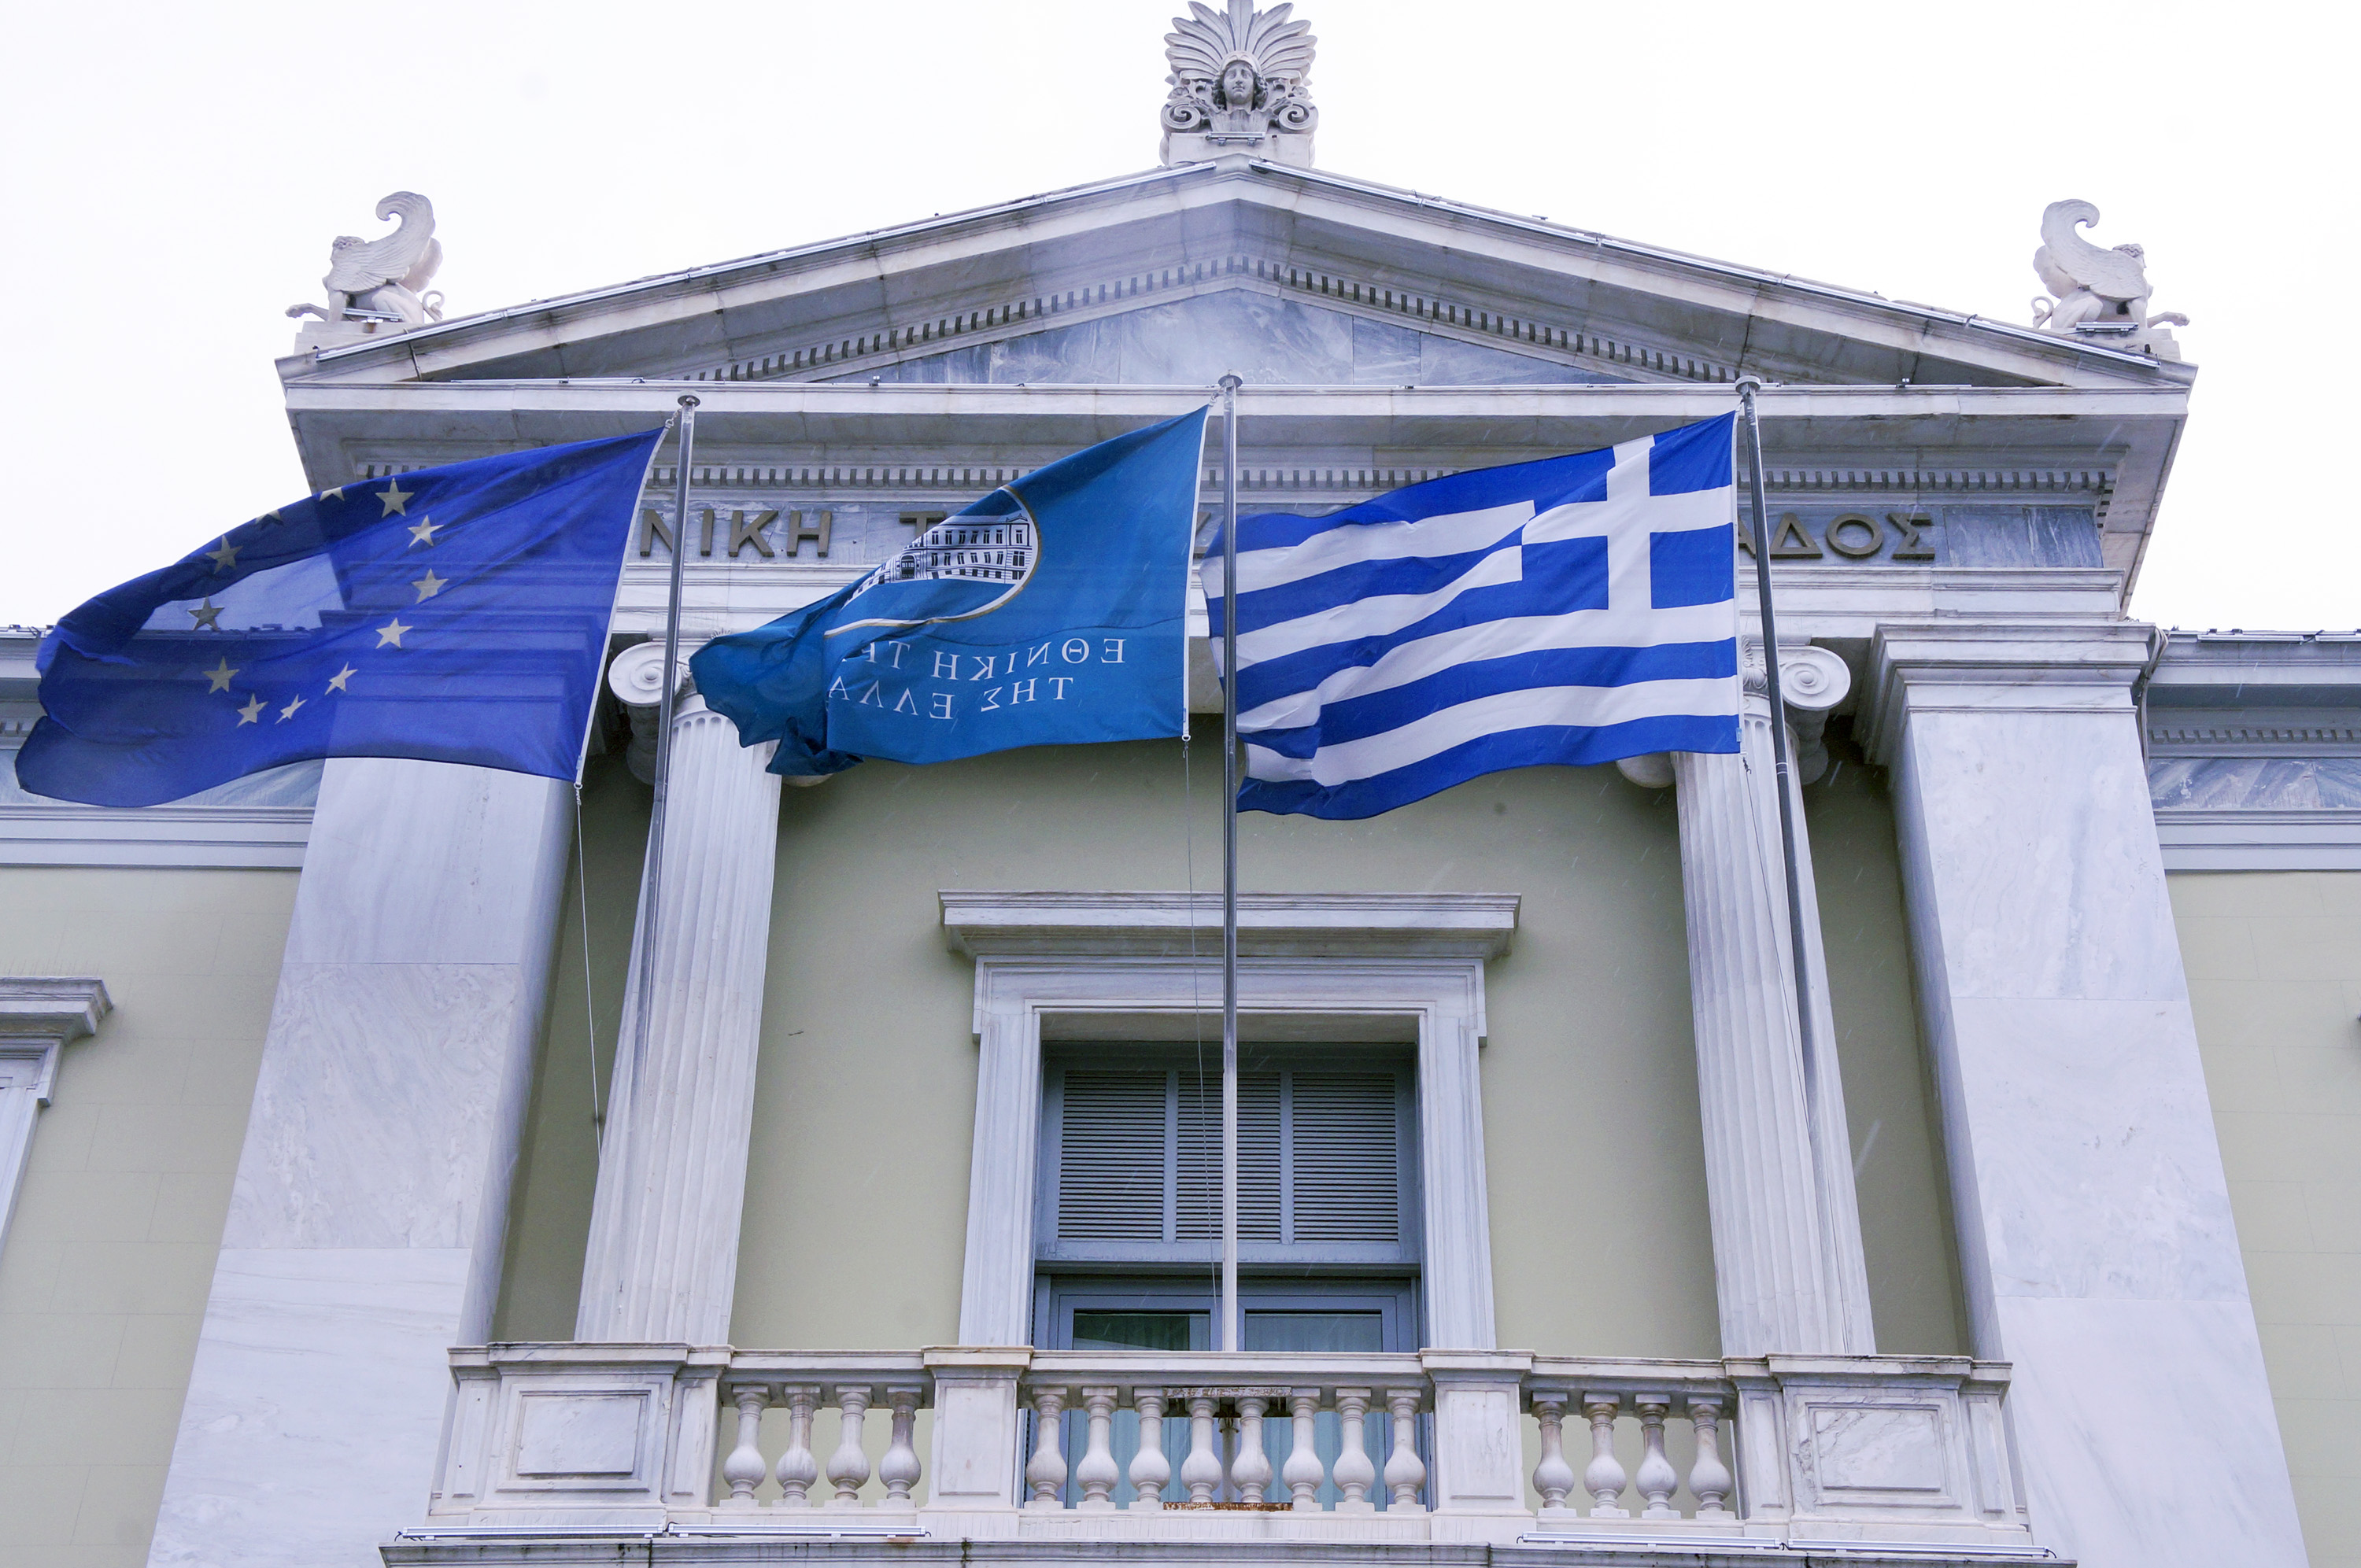 Greek national bank